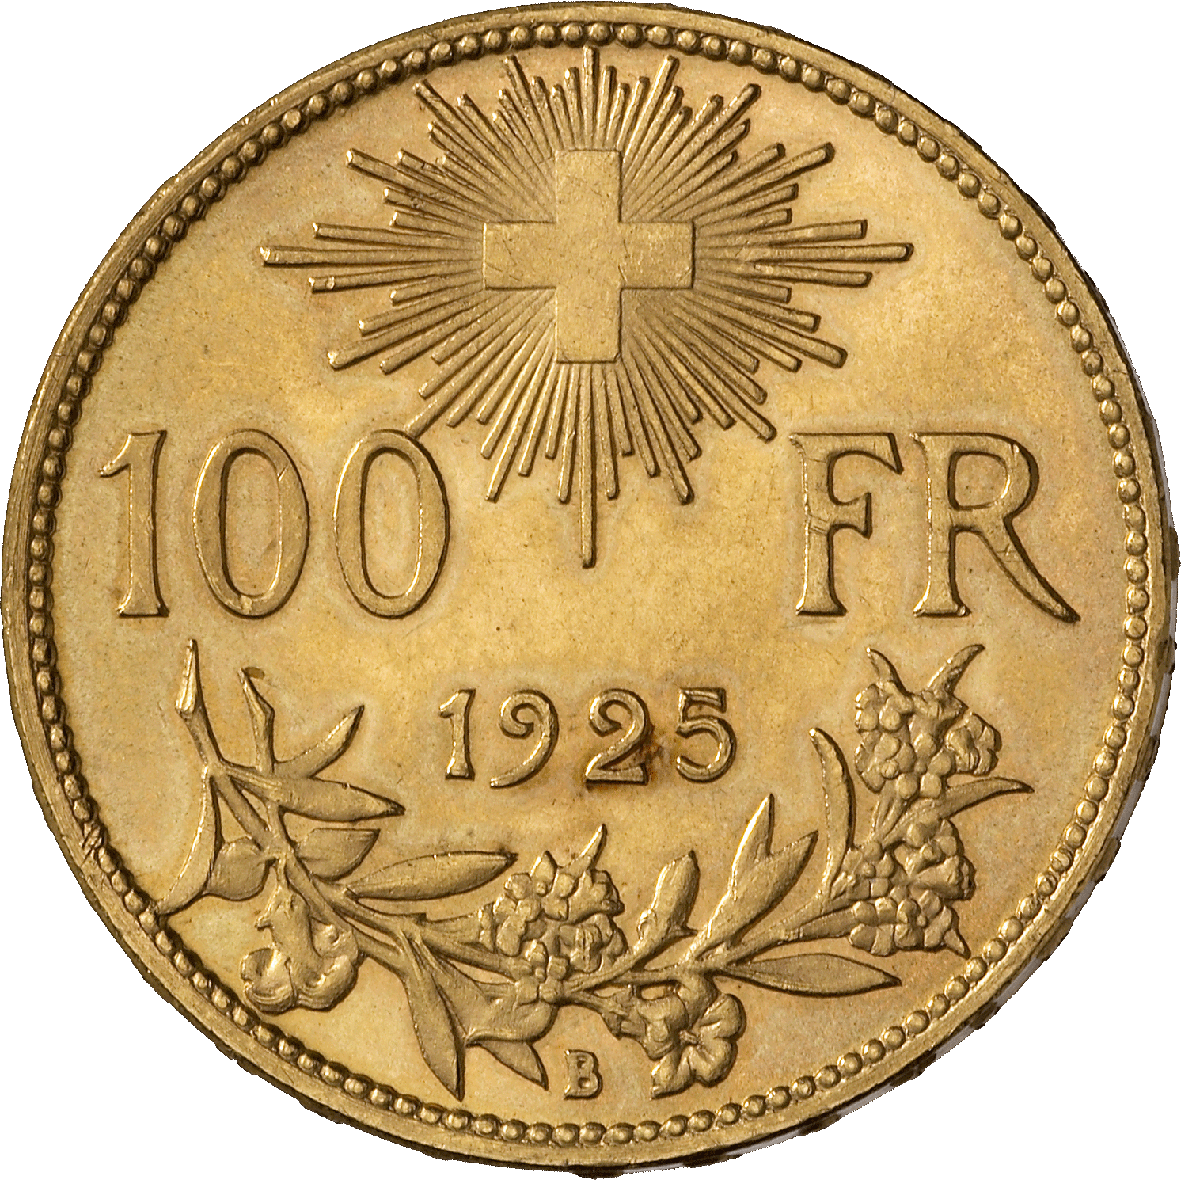 Swiss Confederation, 100 Francs (Vreneli) 1925 (reverse)